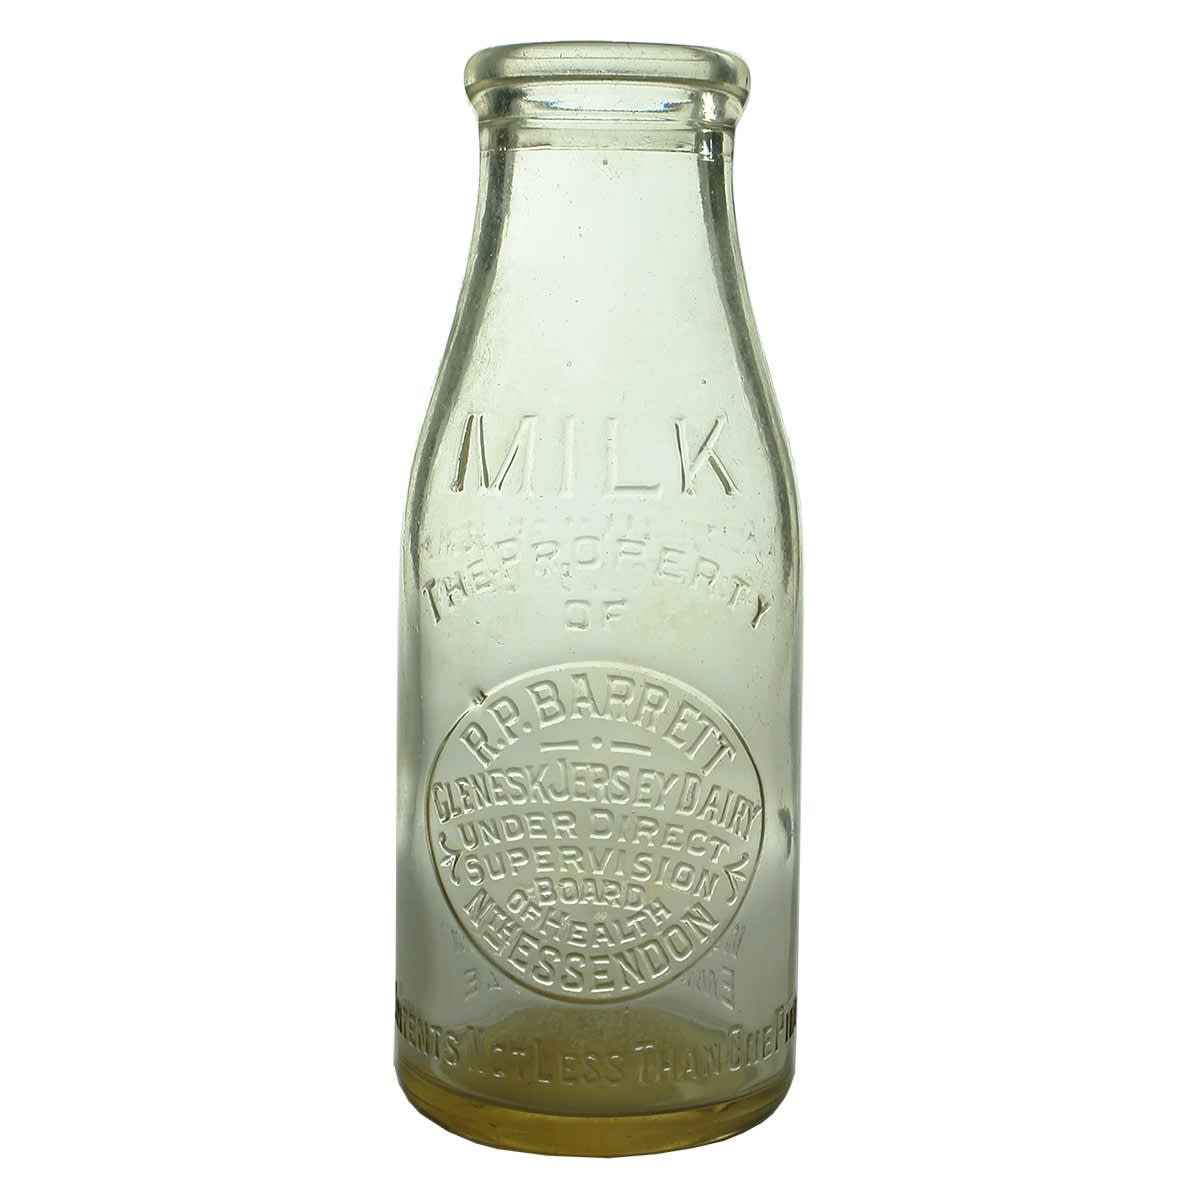 Milk. R. P. Barrett, Glenesk Jersey Dairy, Nth Essendon. Early variety. Wad Lip. 1 Pint. (Victoria)